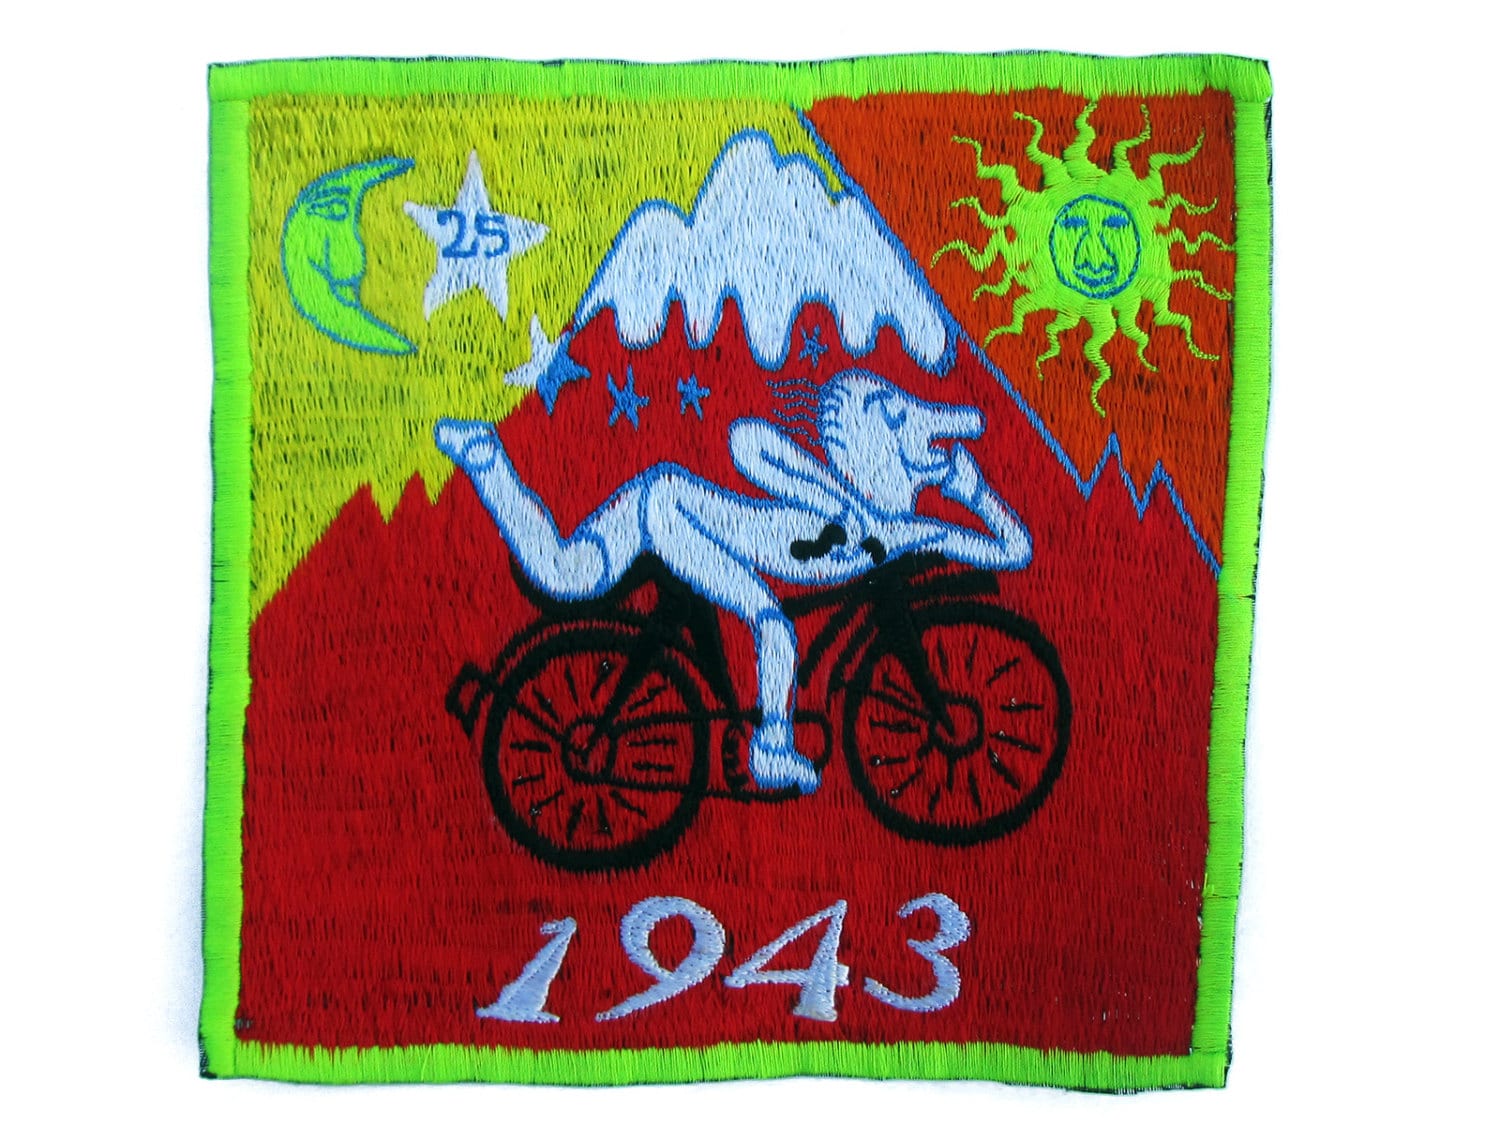 Red Bicycle Day Albert Hofmann 1943 LSD Cult Patch Burning Man Psychedelic Acid Trip Hippie Drug Visionary Divine Healing Medicine